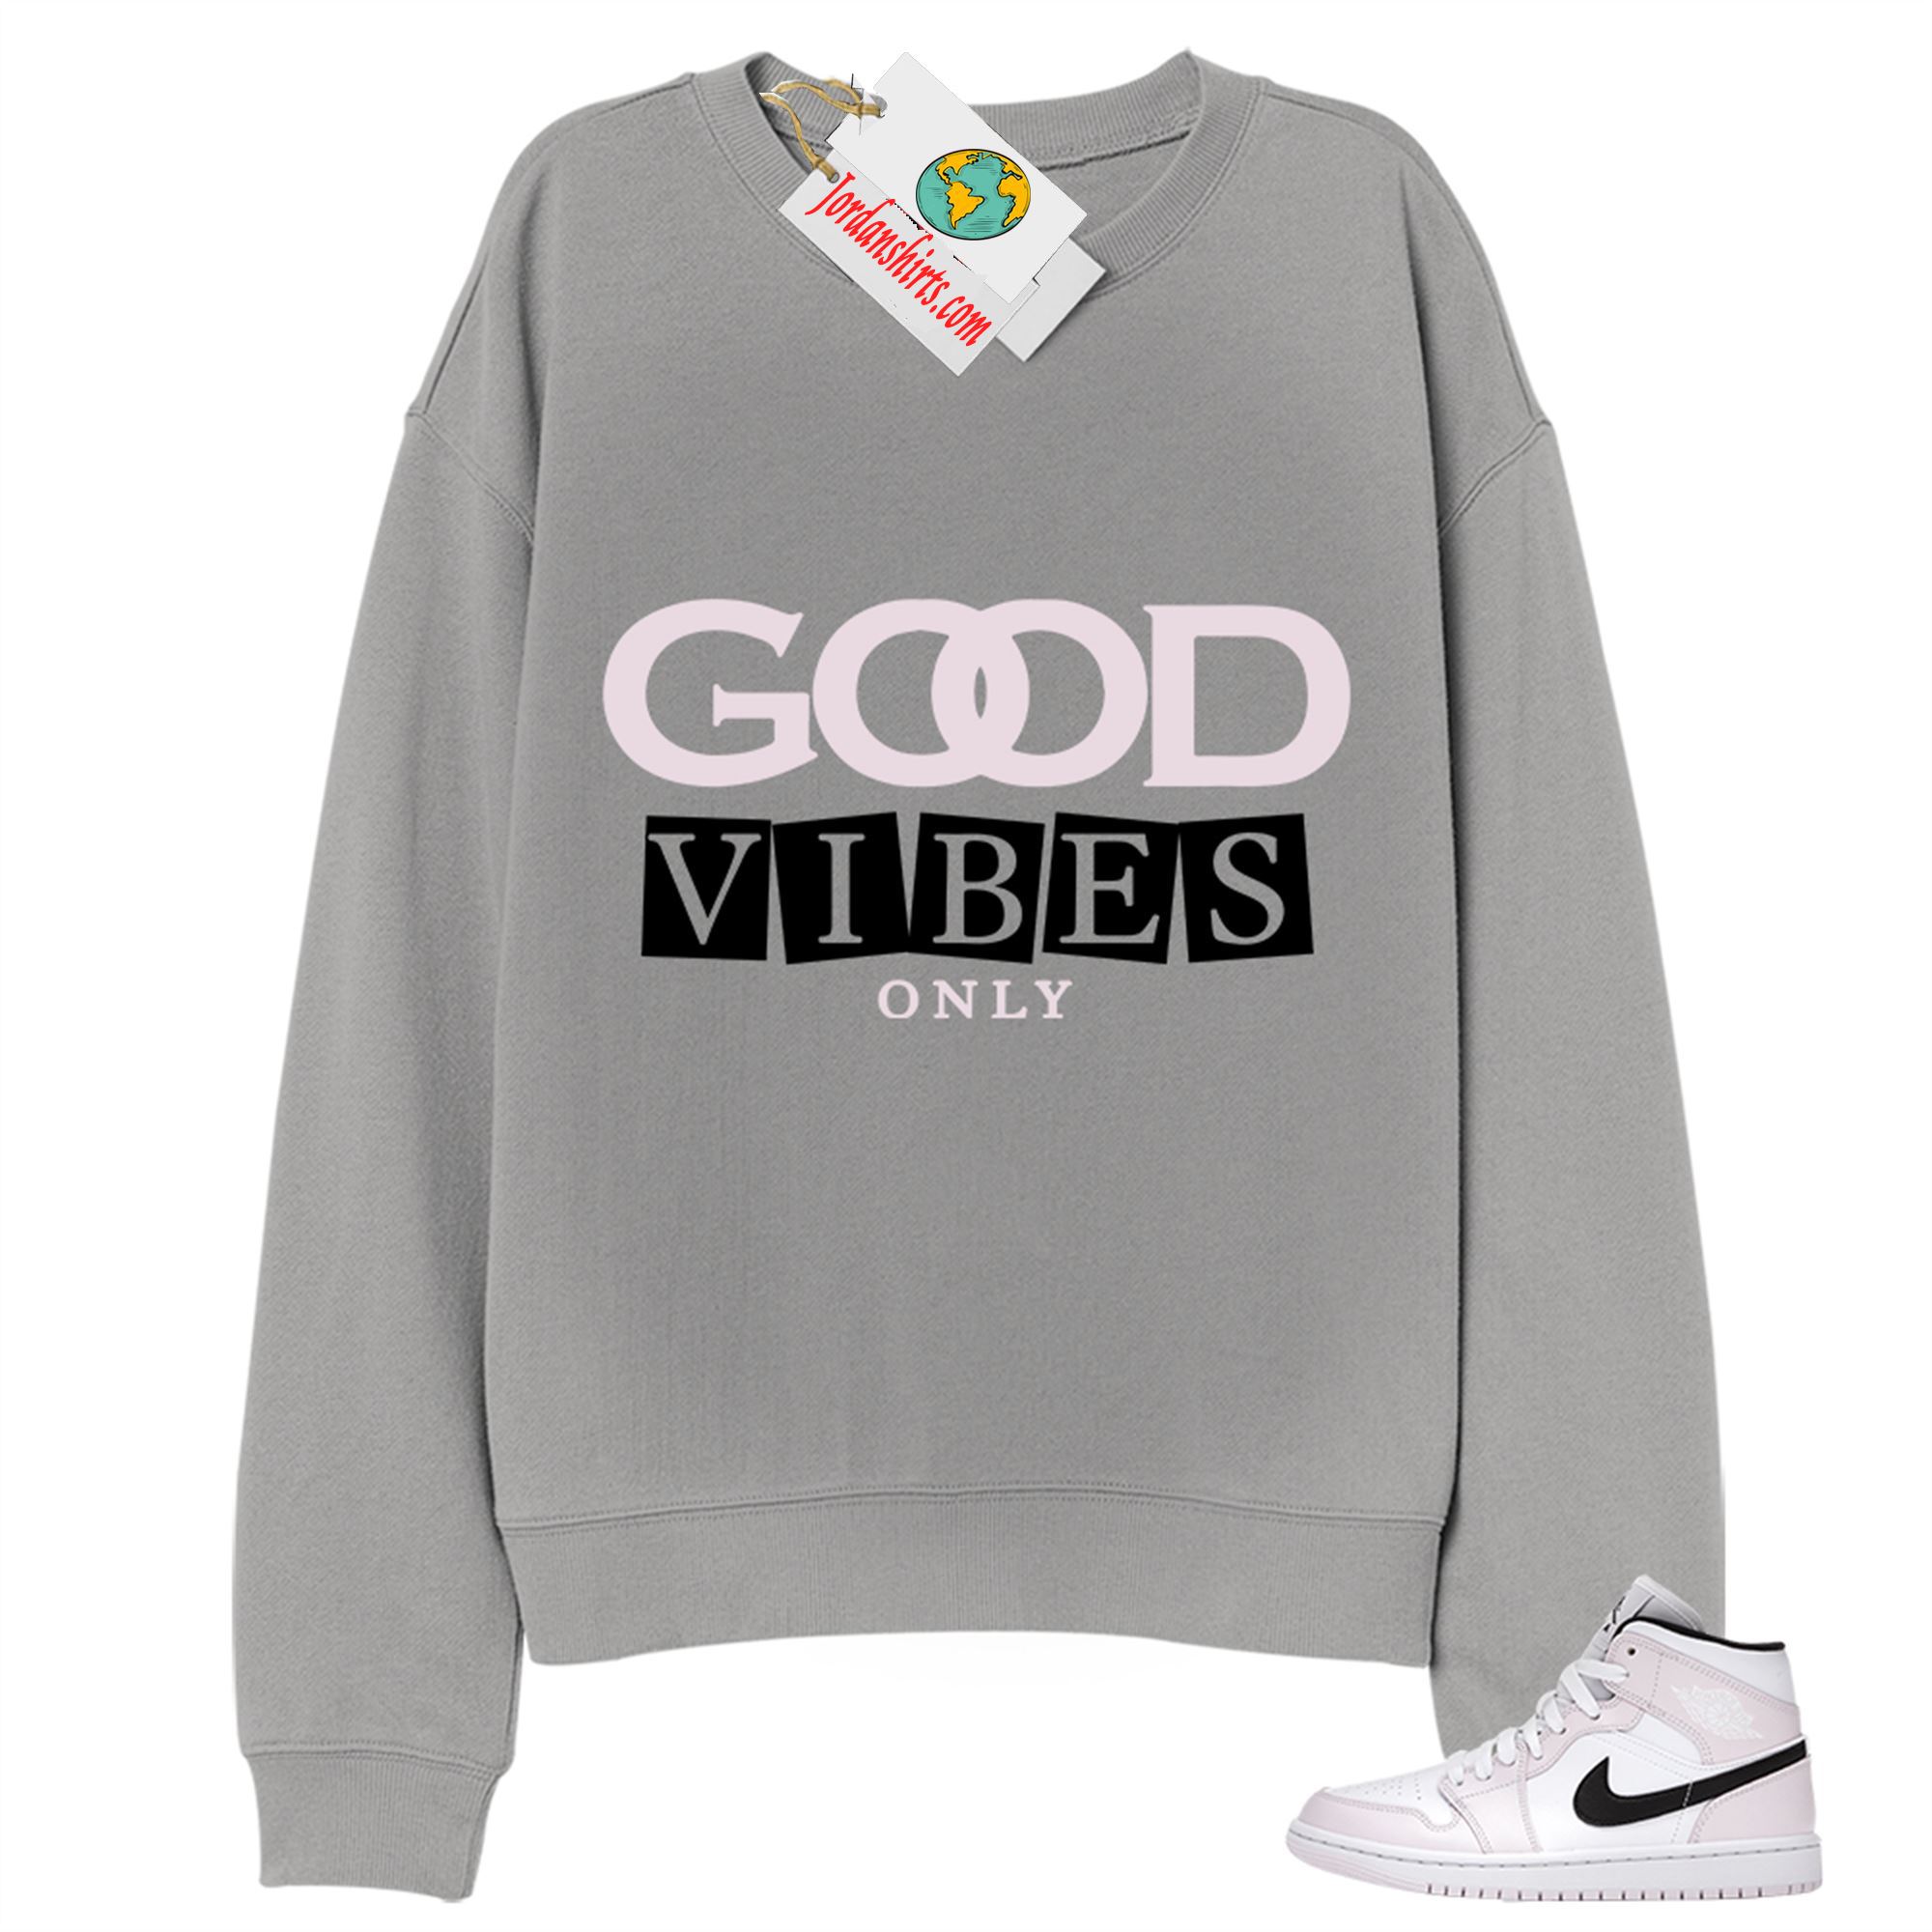 Jordan 1 Sweatshirt, Good Vibes Only Grey Sweatshirt Air Jordan 1 Barely Rose 1s Size Up To 5xl